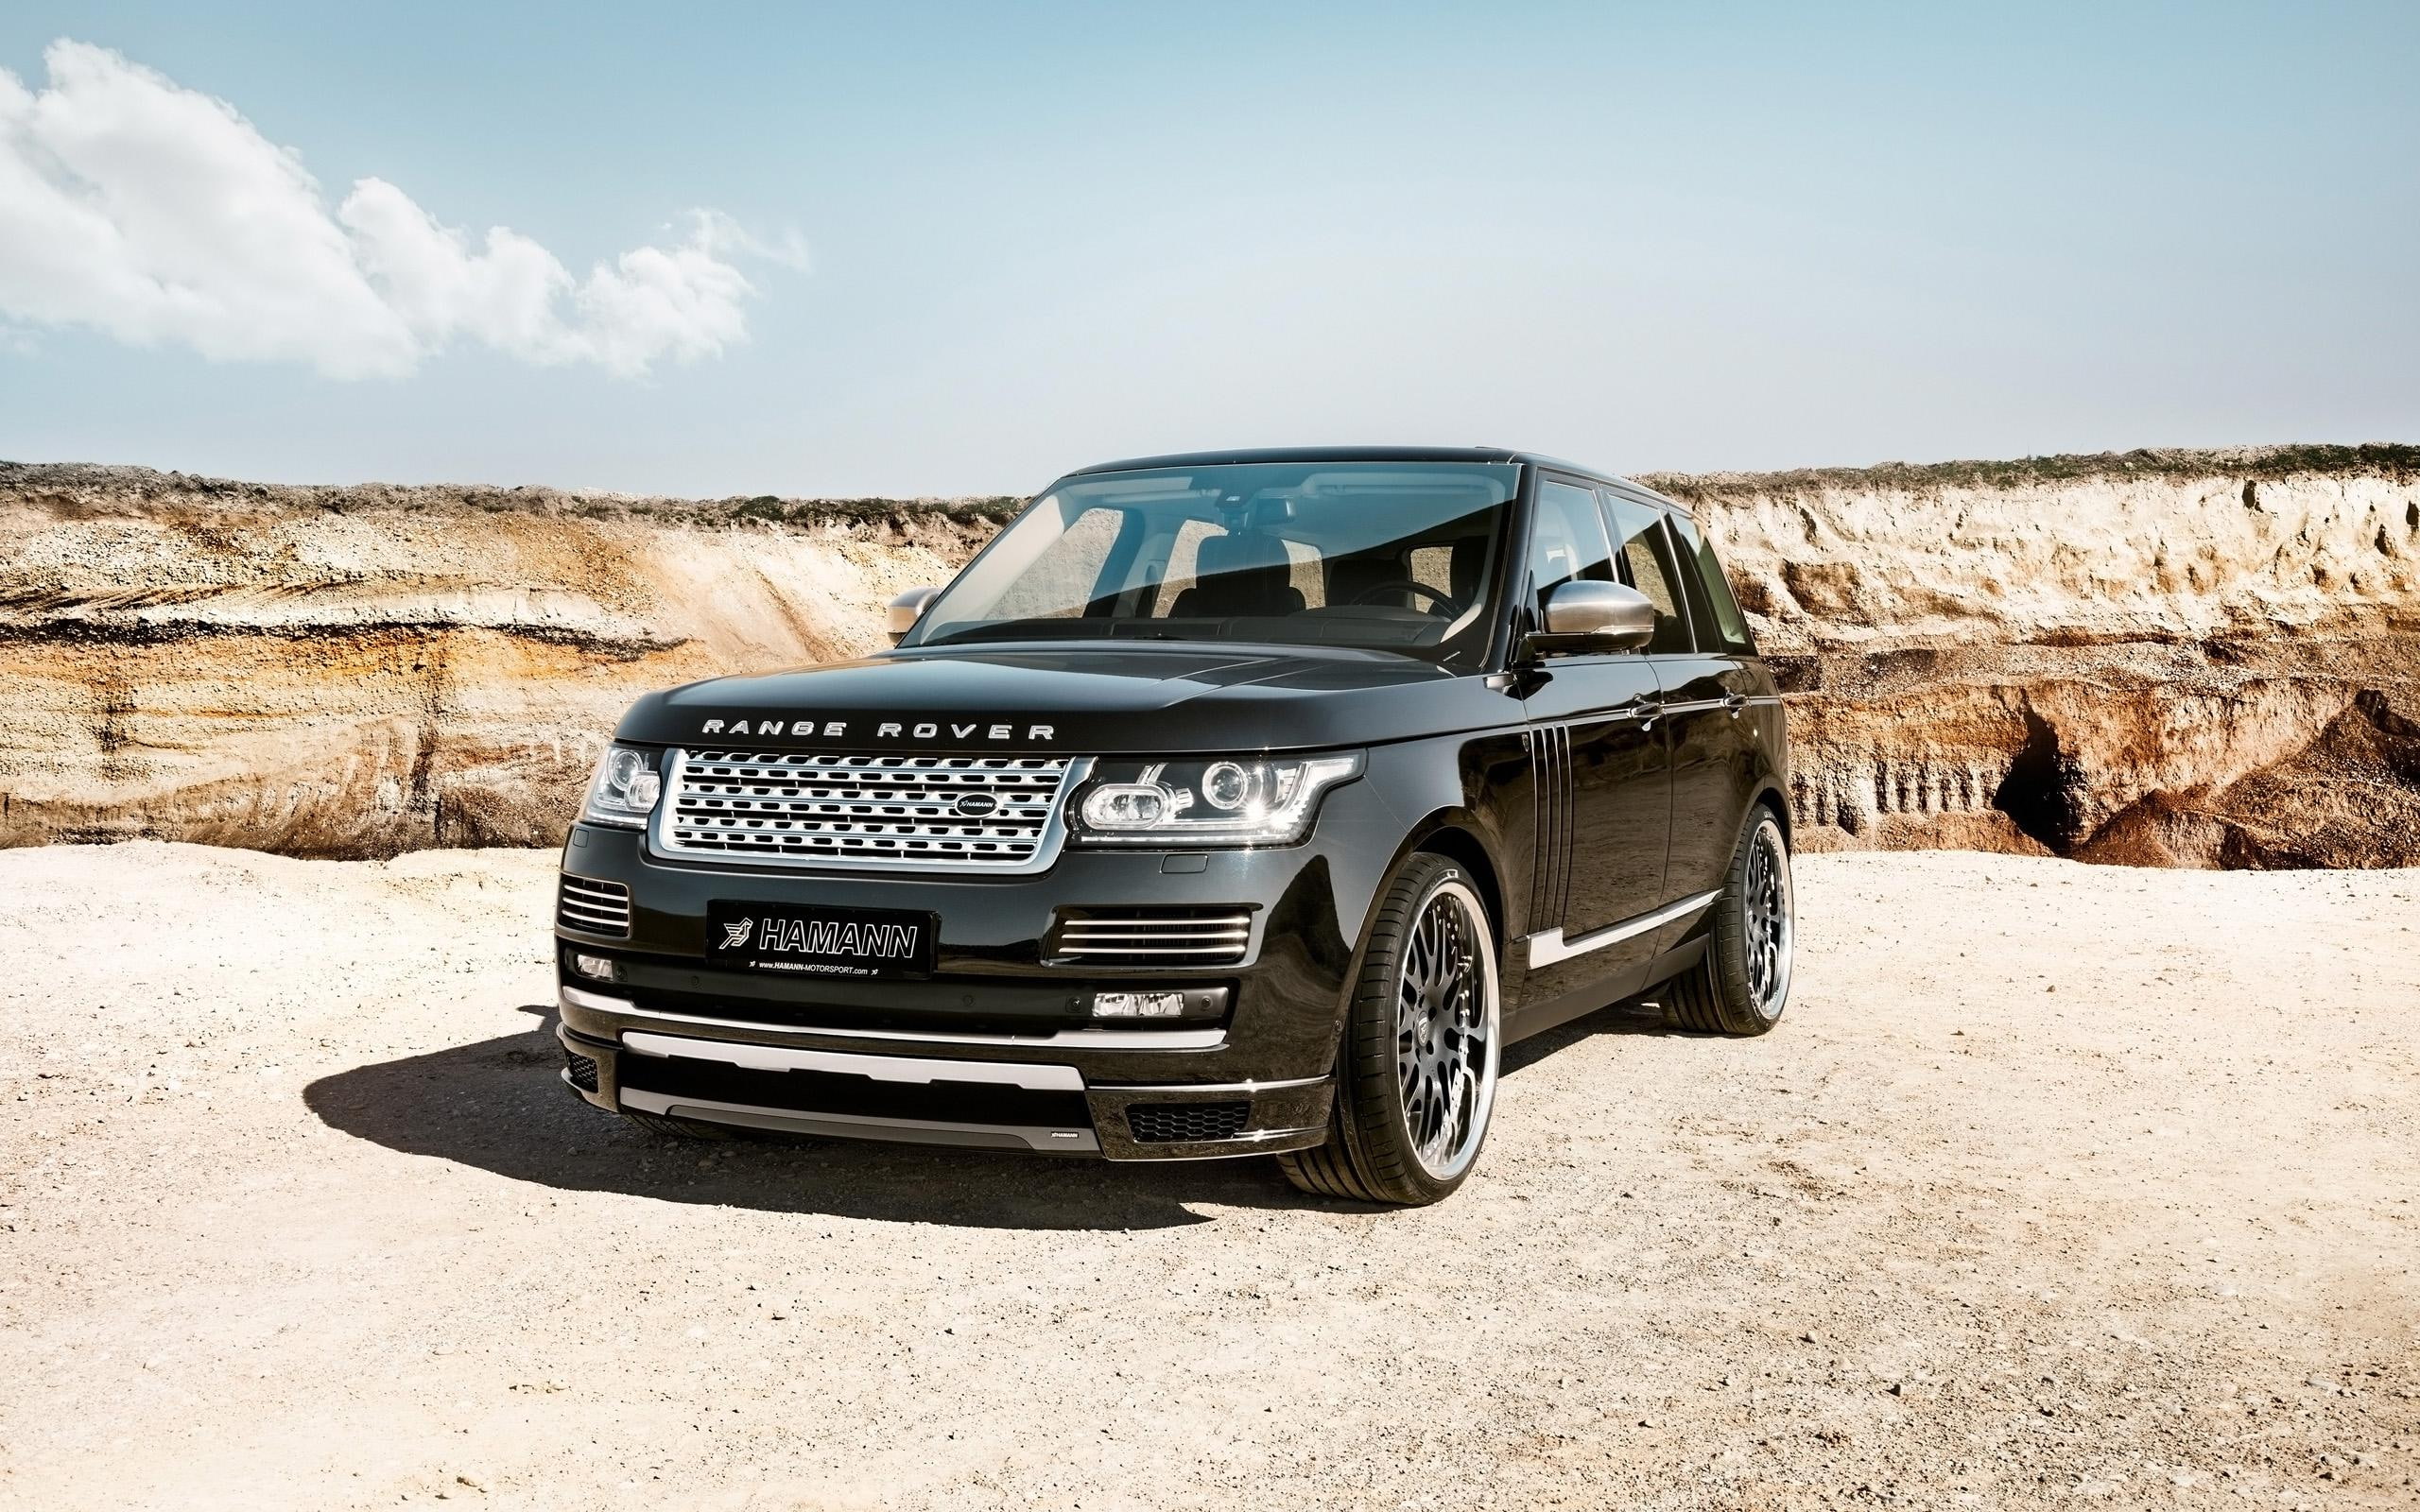 2014 Hamann Range Rover Vogue, black range rover suv, cars, land rover